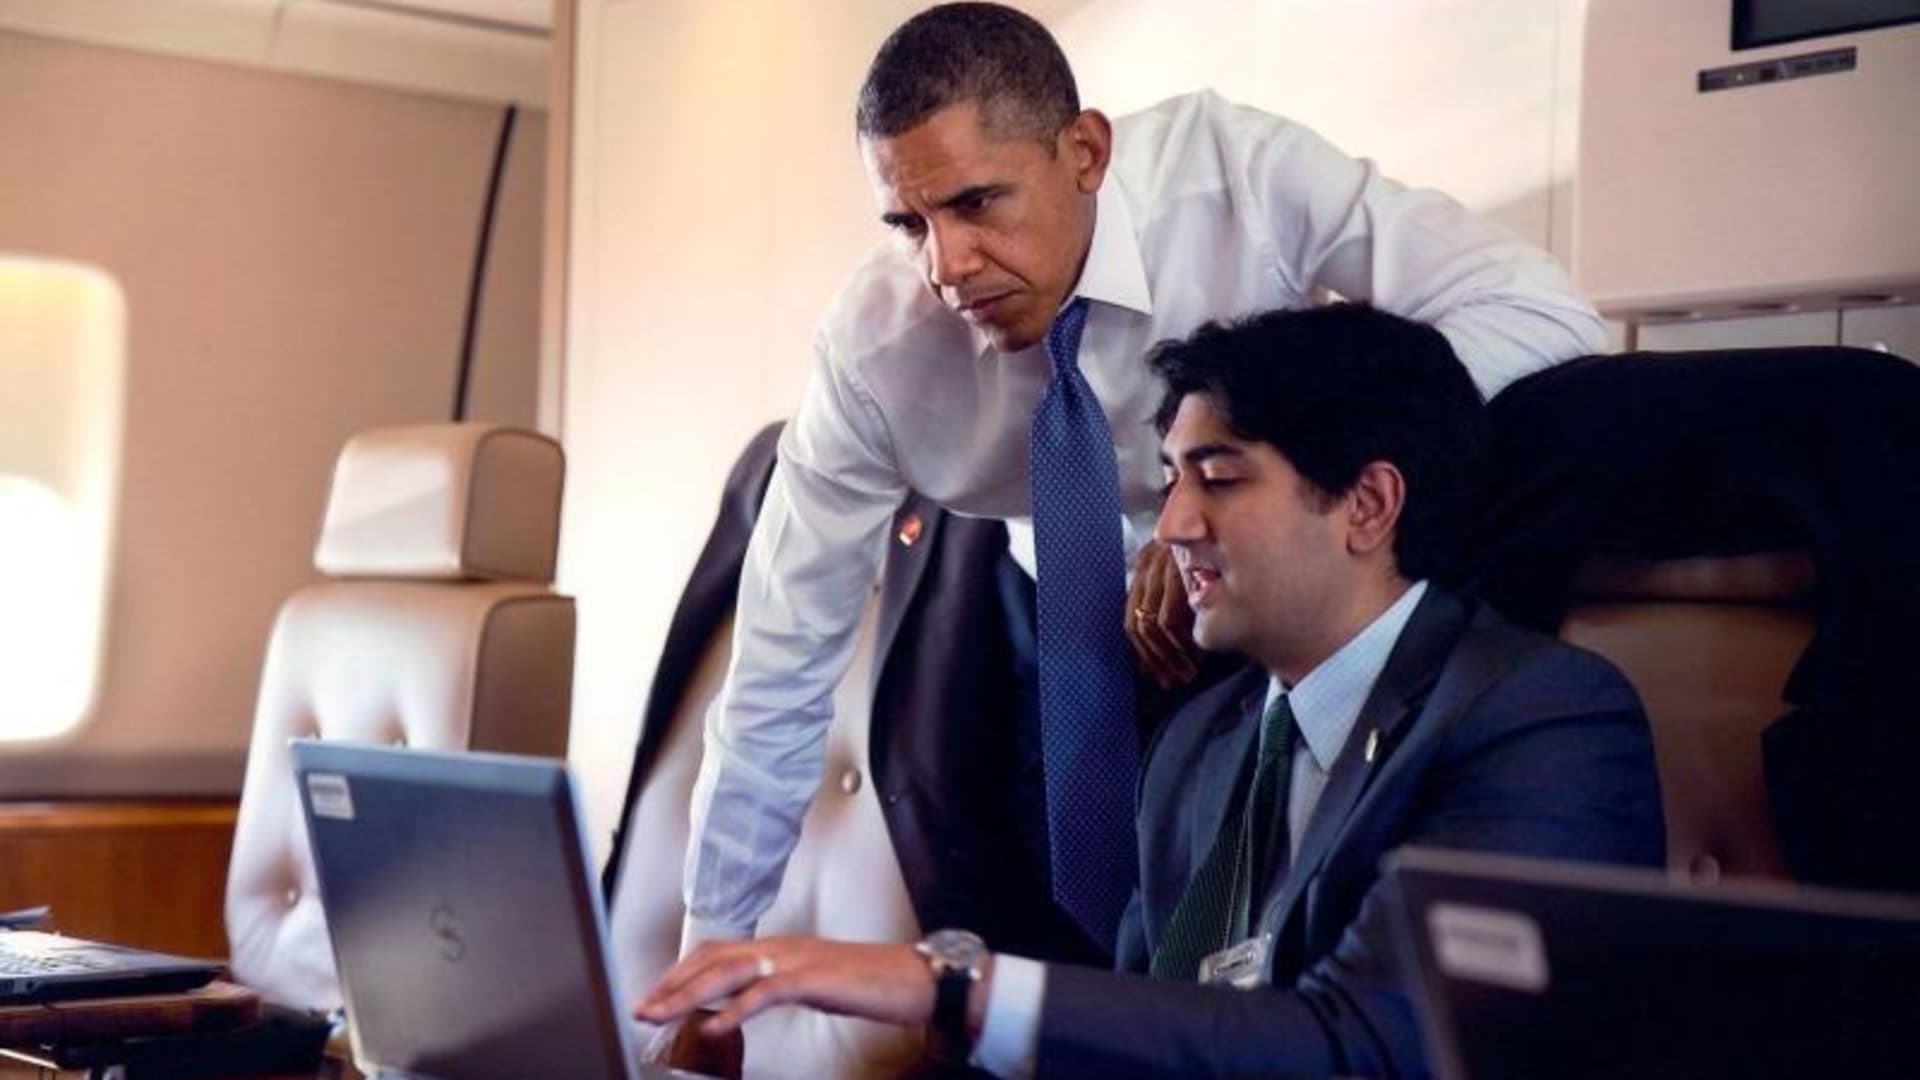 The best career advice Barack Obama gave his ex-speechwriter